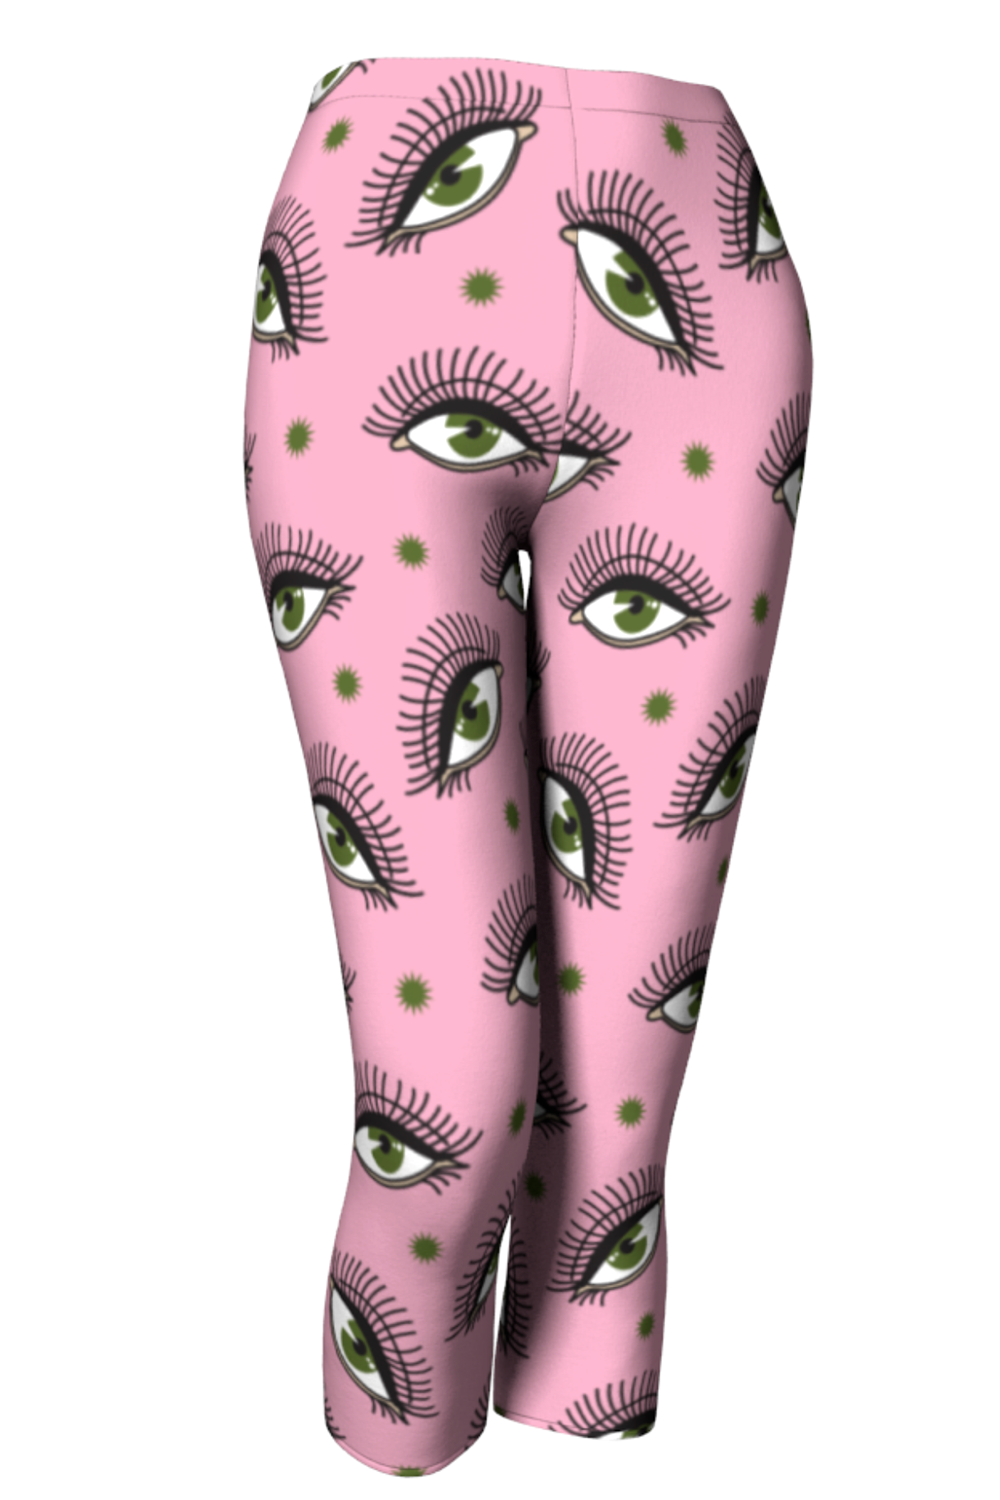 Eye See You Pink Long Workout Leggings – The Oblong Box Shop™